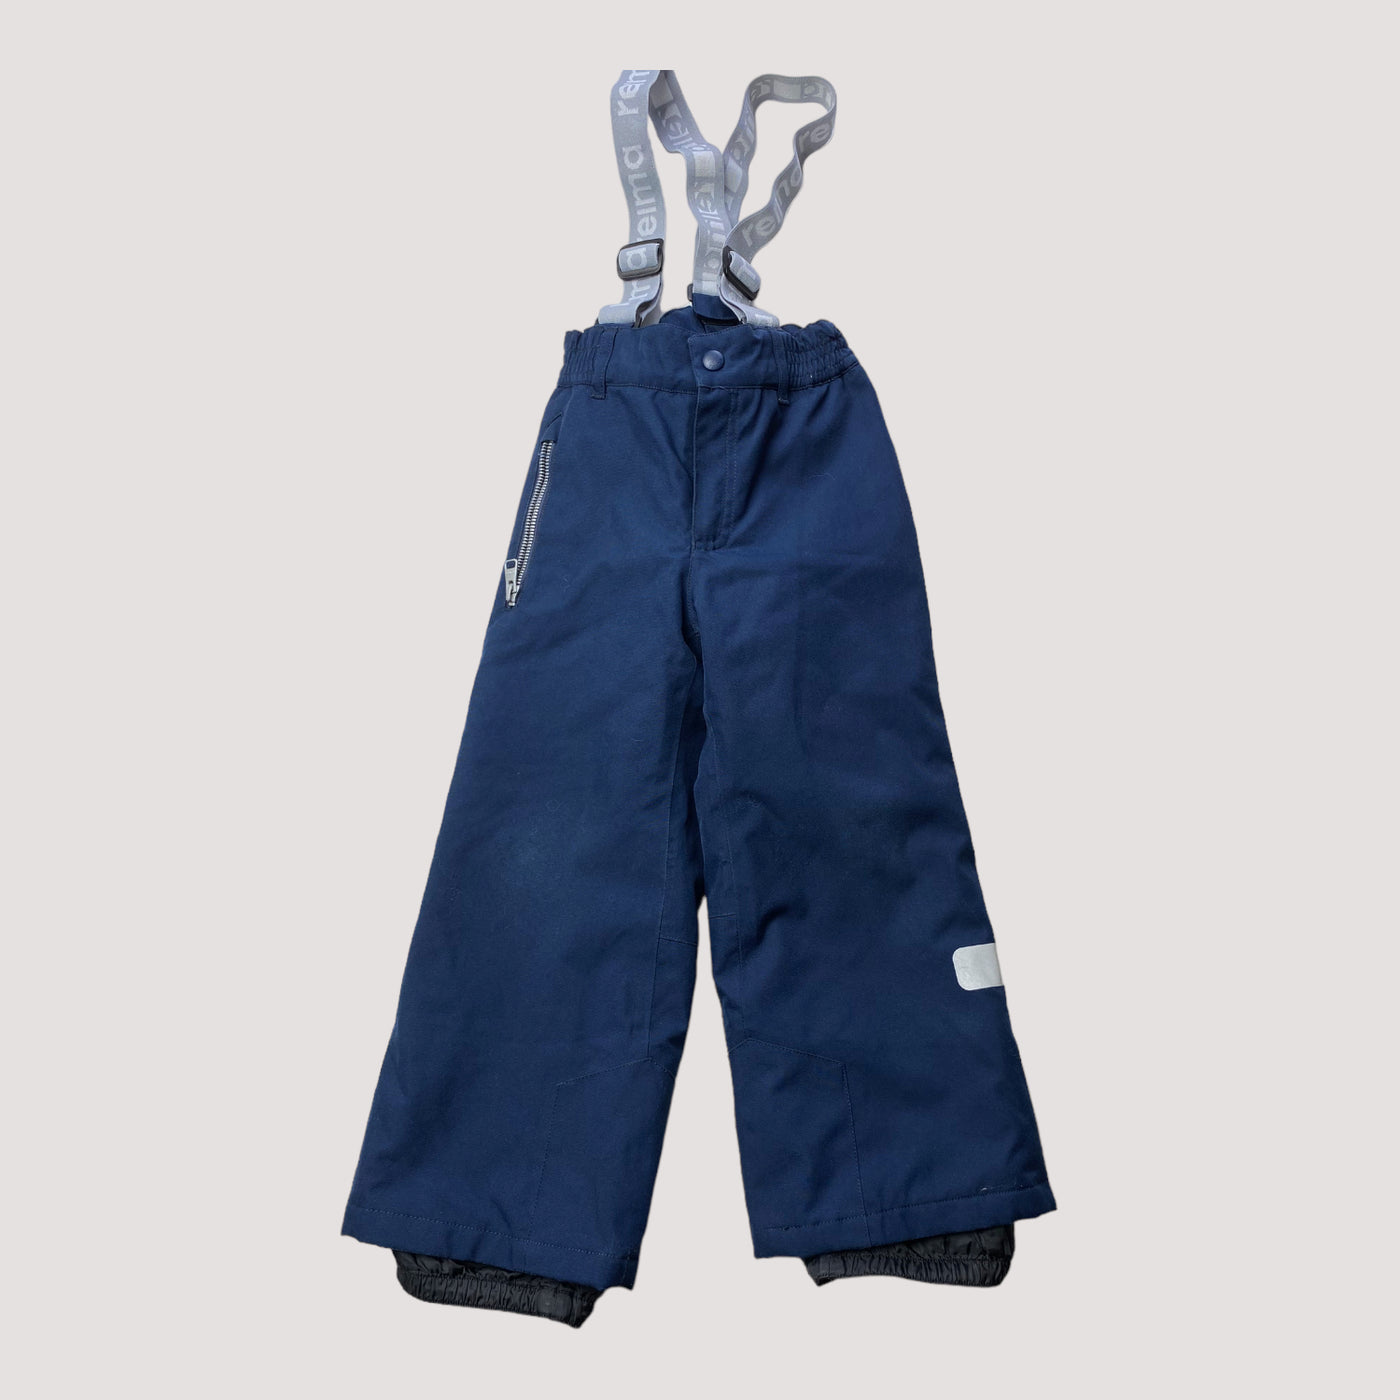 Reima winter outdoor pants, midnight blue | 110cm